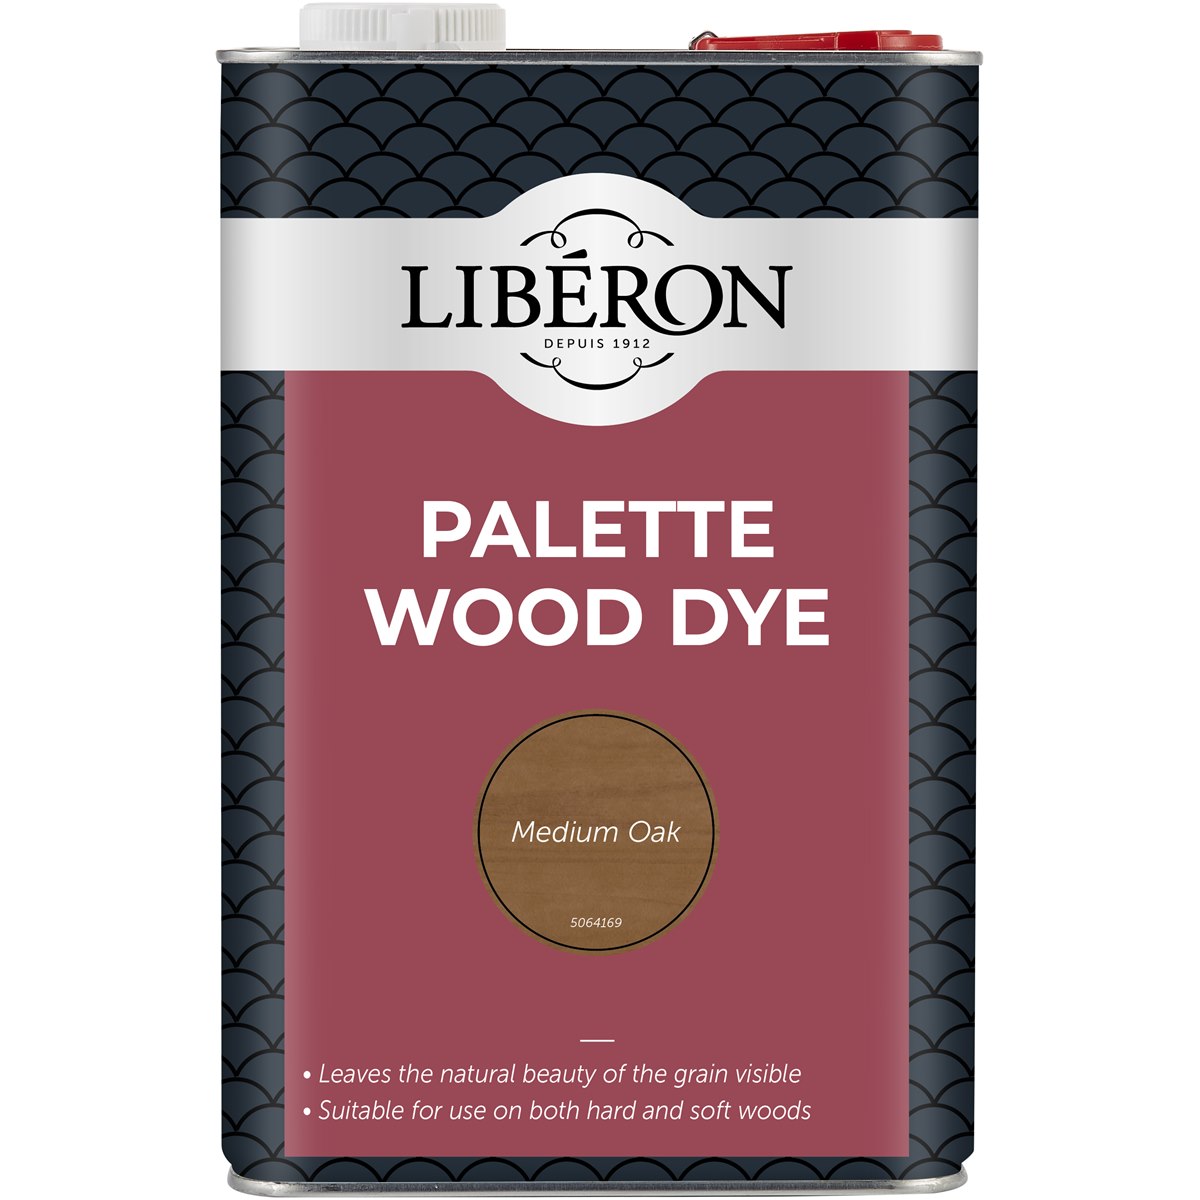 Liberon Palette Wood Dye Medium Oak 5 Litre